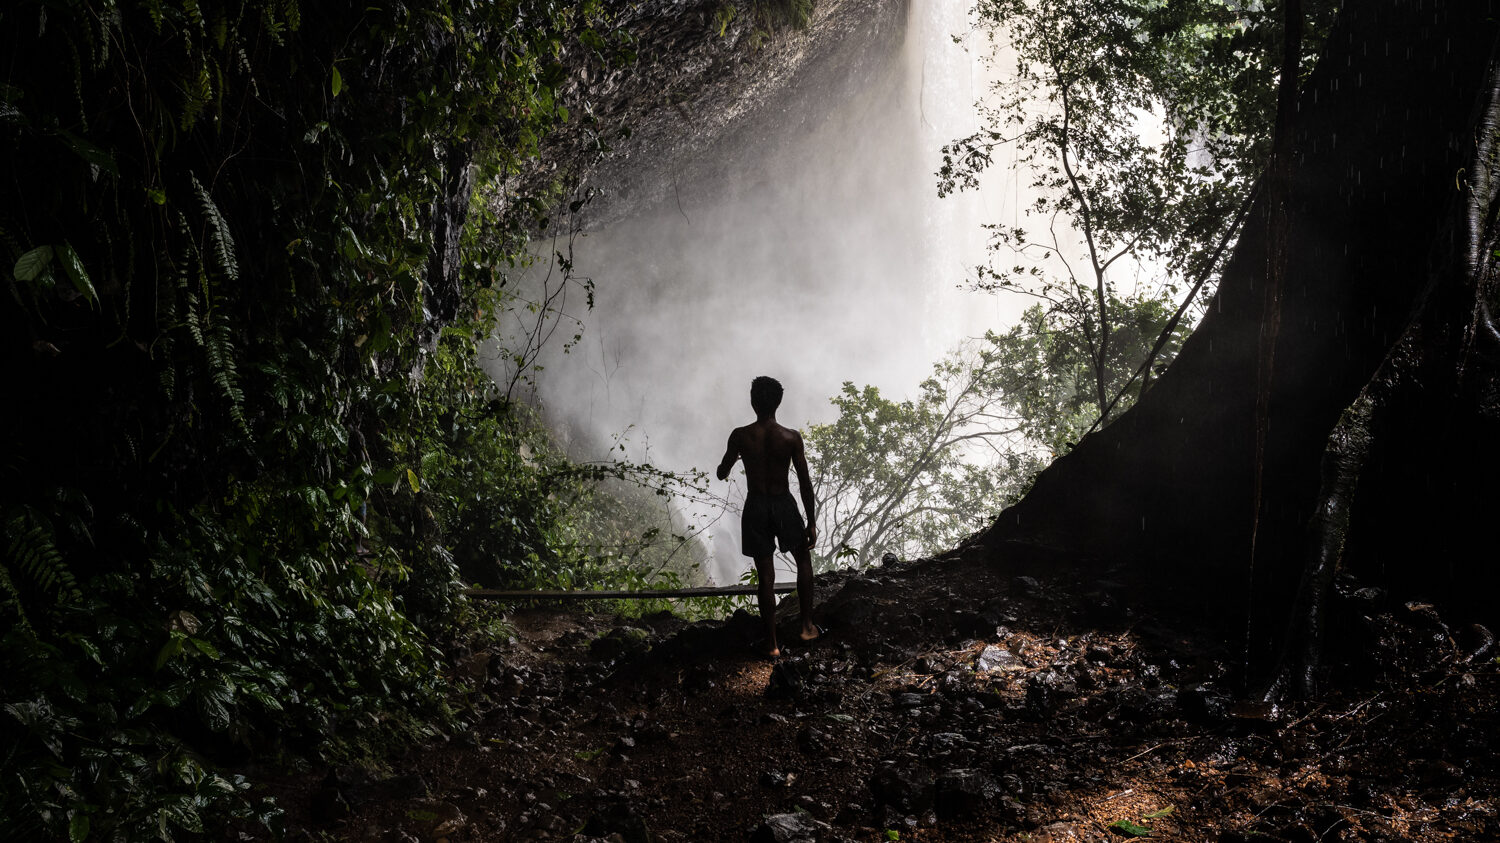 Agbokim Waterfall, Ikom, Nigeria